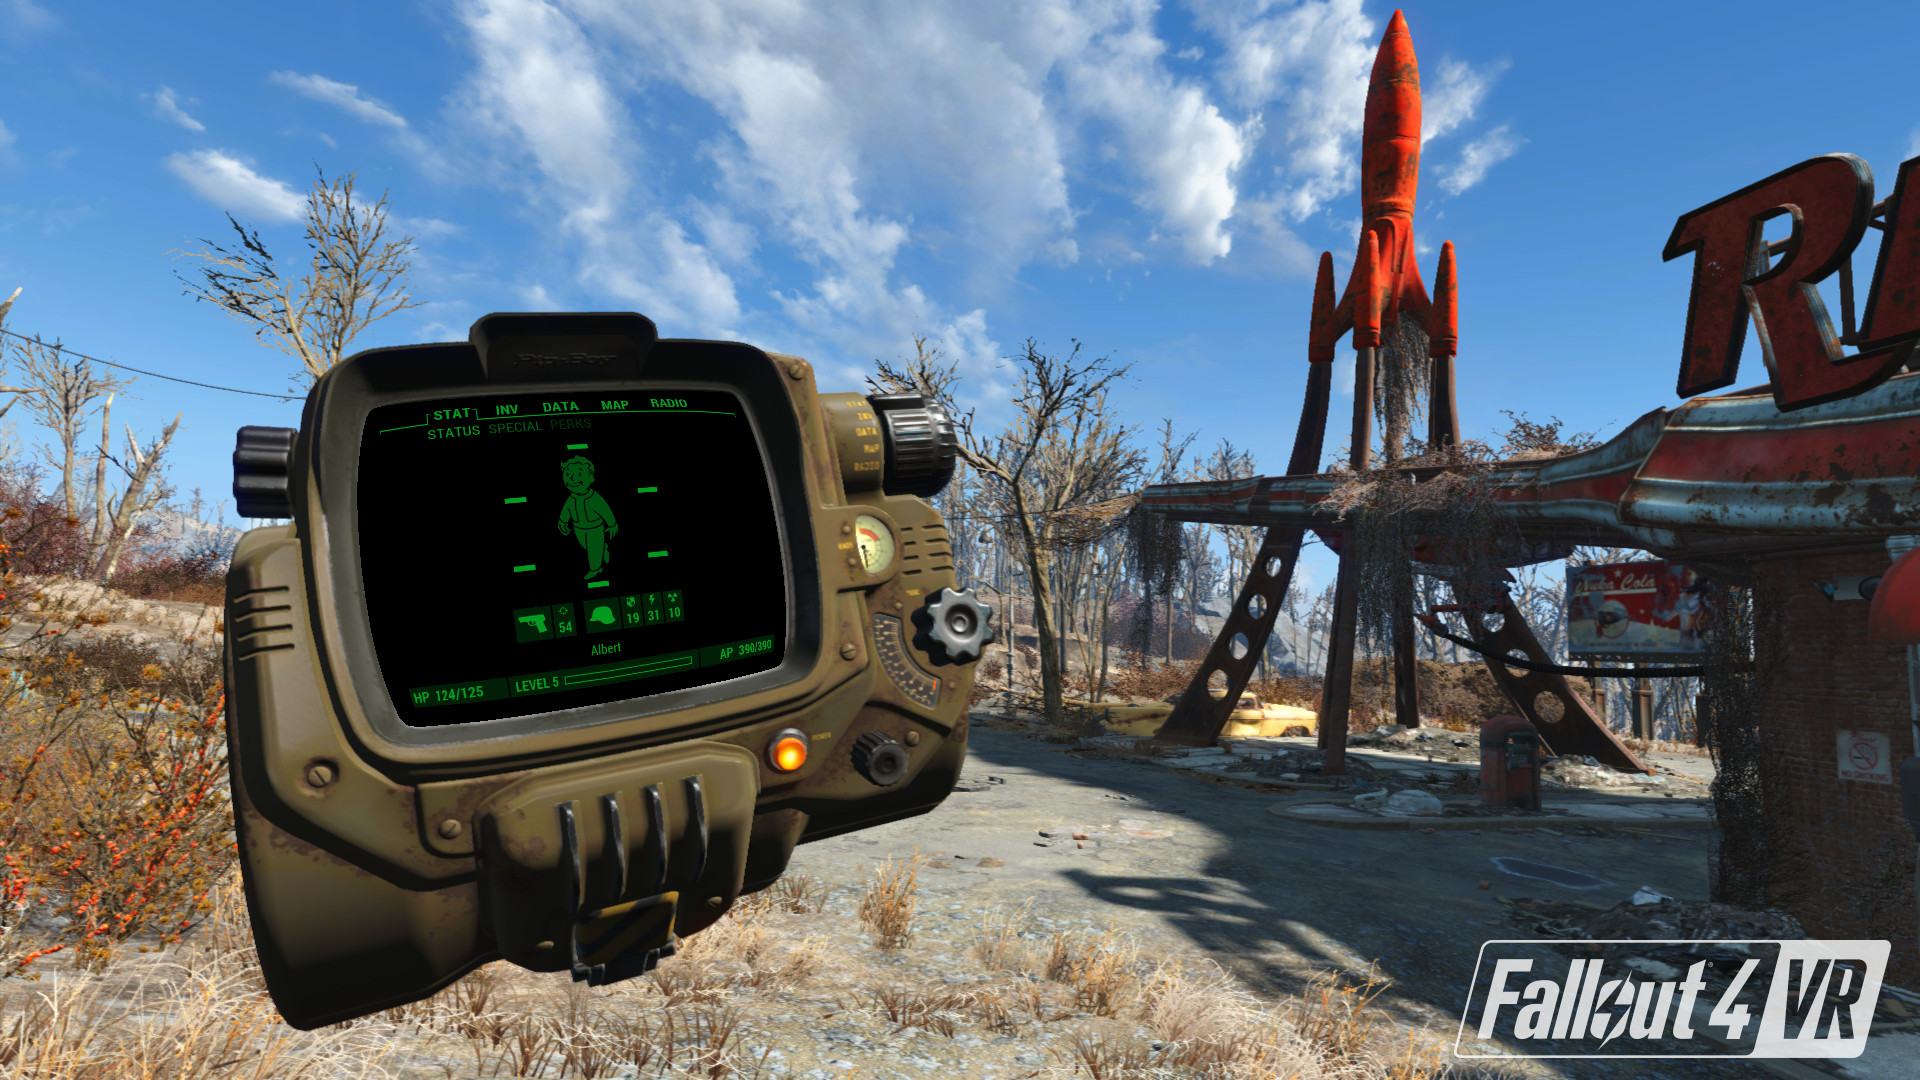 Fallout 4 VR en Steam